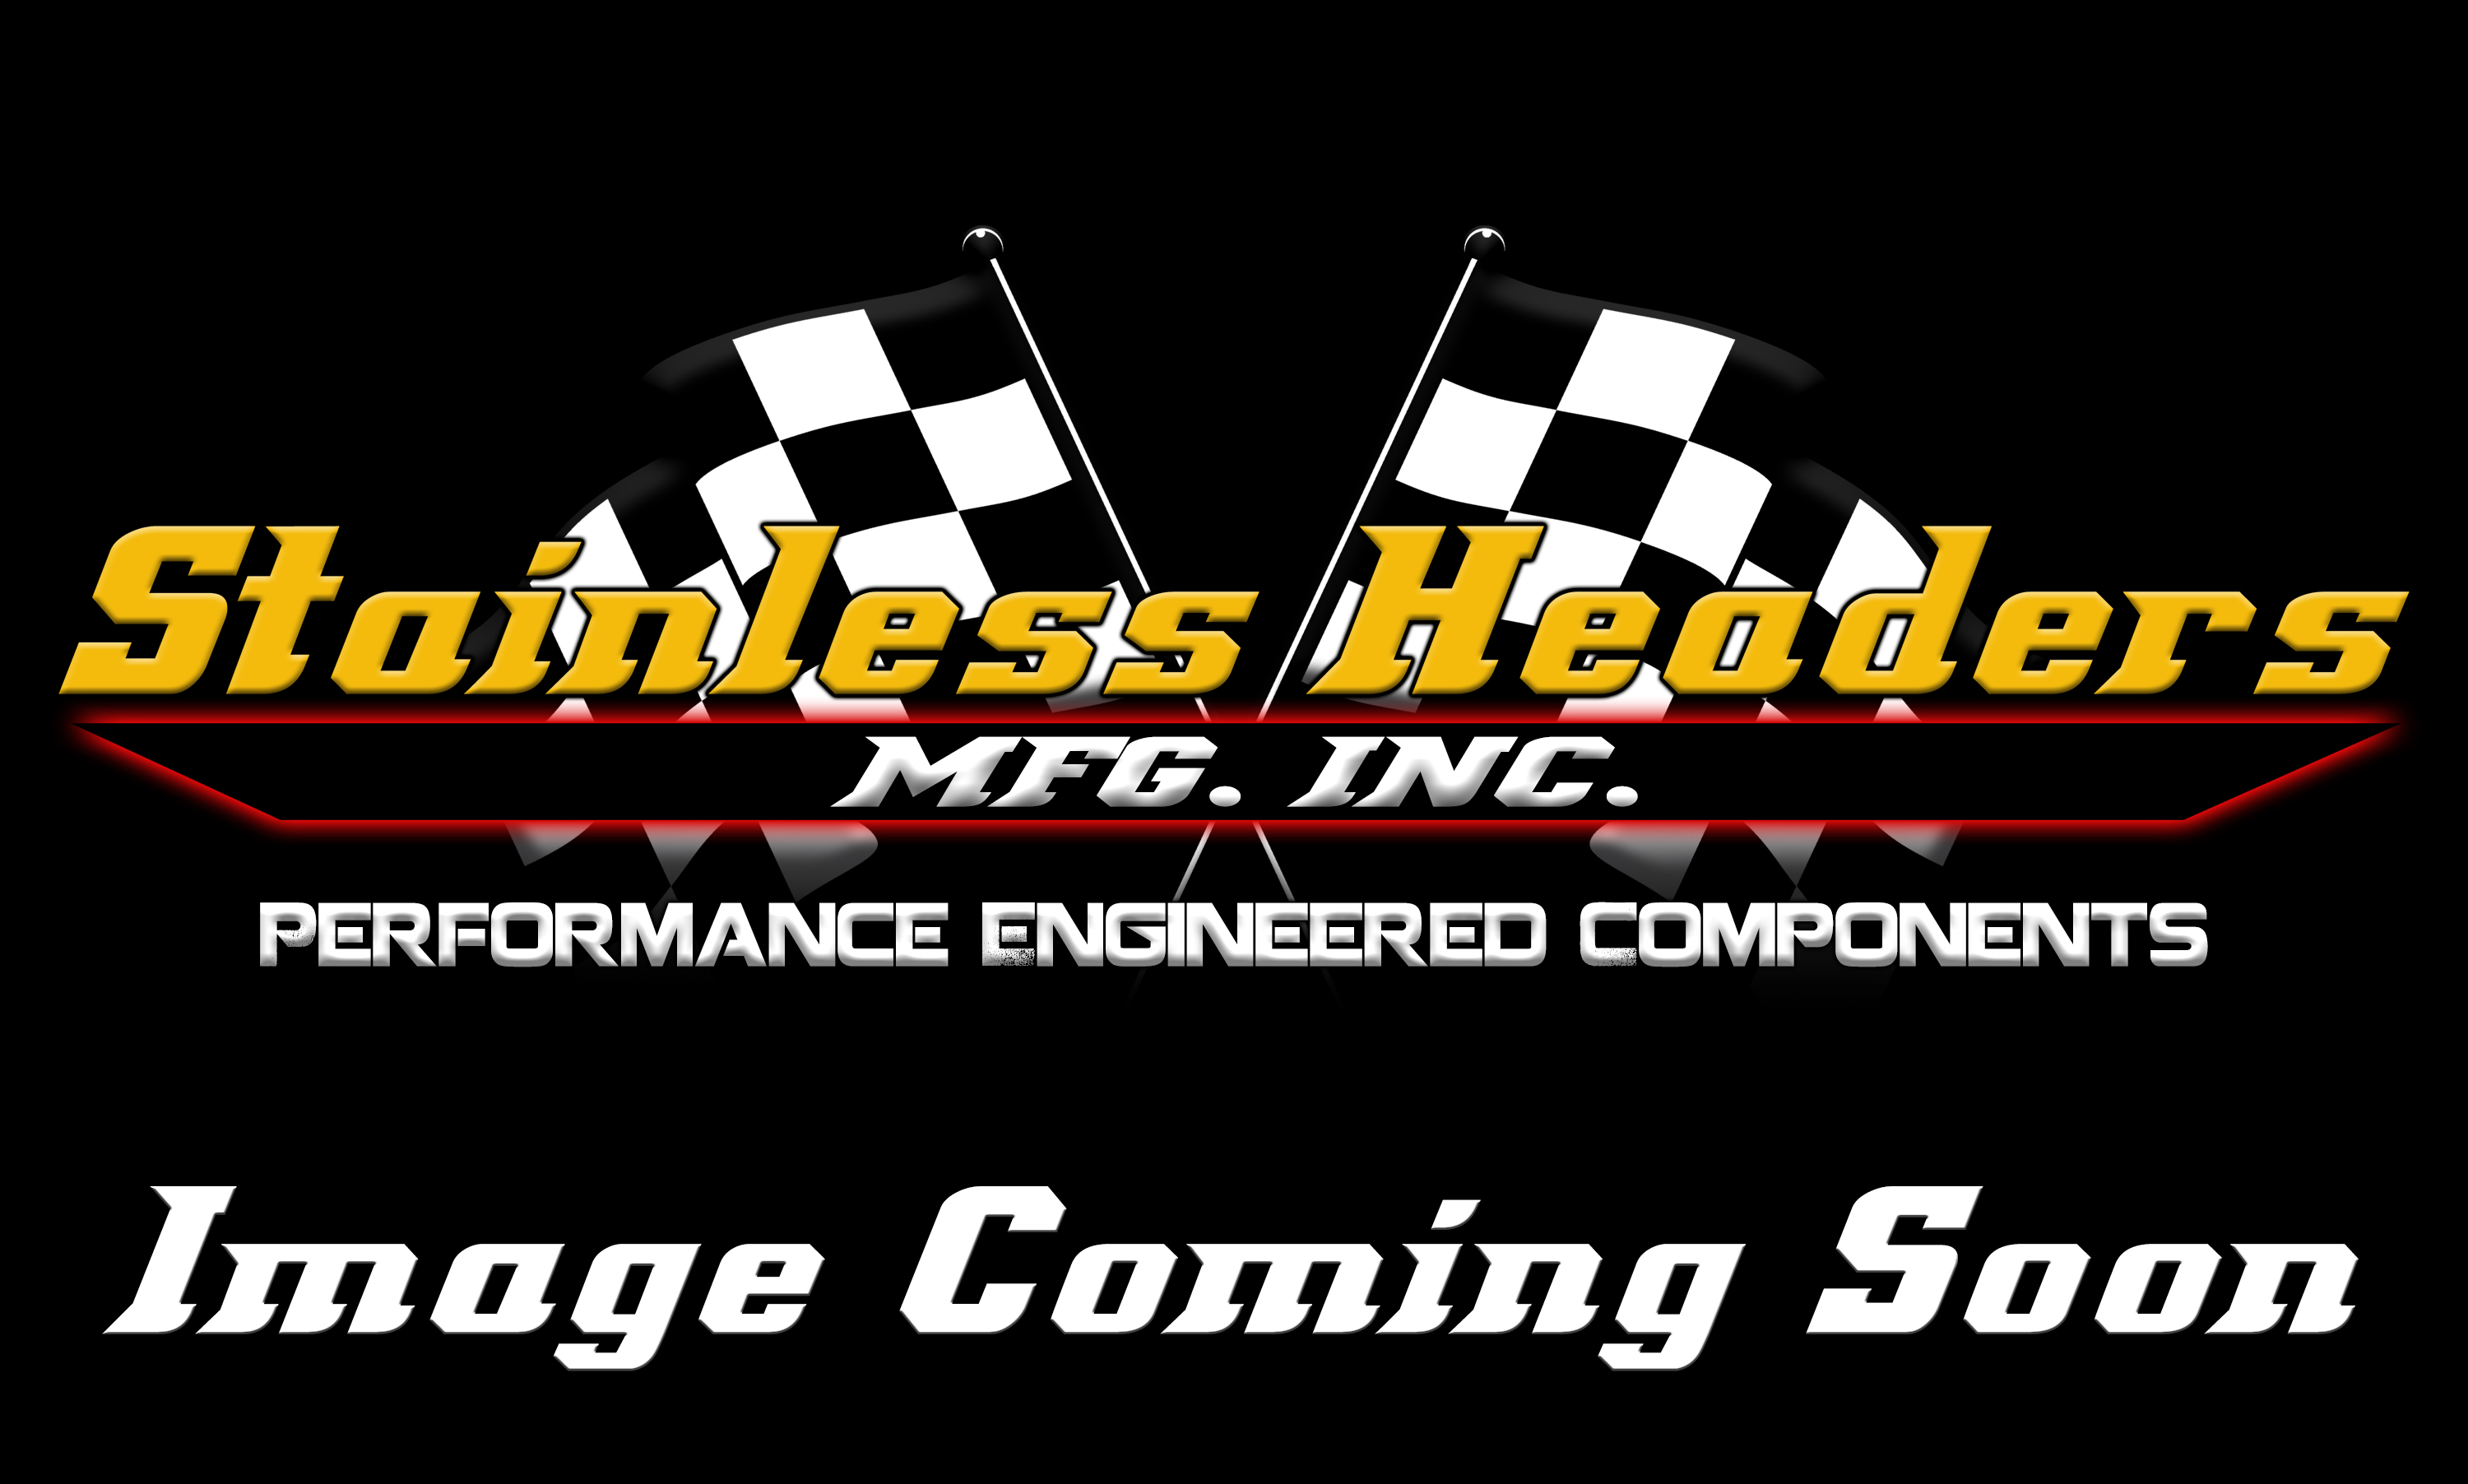 Stainless Headers - Small Block Chevy 18-Degree Custom Turbo Header Build Kit - Image 1